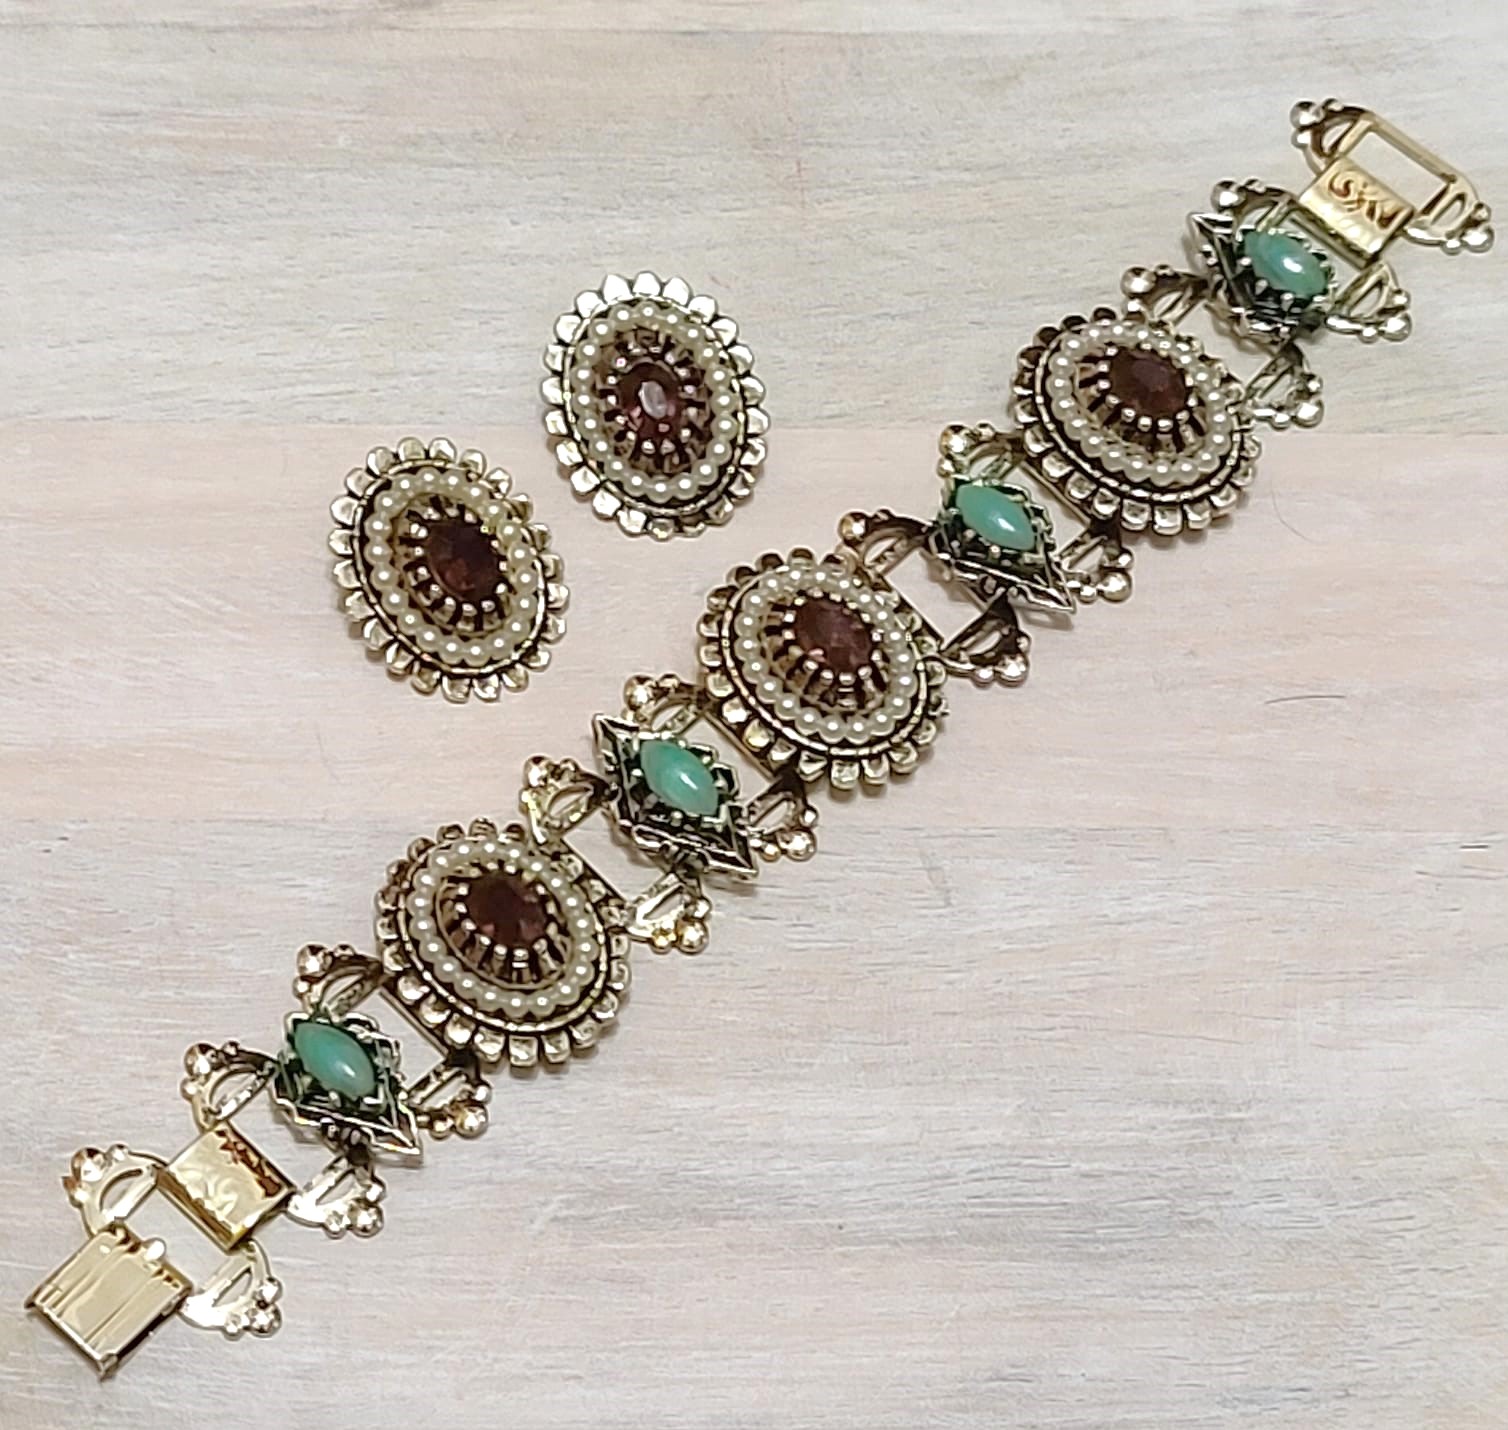 Vintage bracelet and earrings set, pearls, purple rhinestones and turquoise cabachons